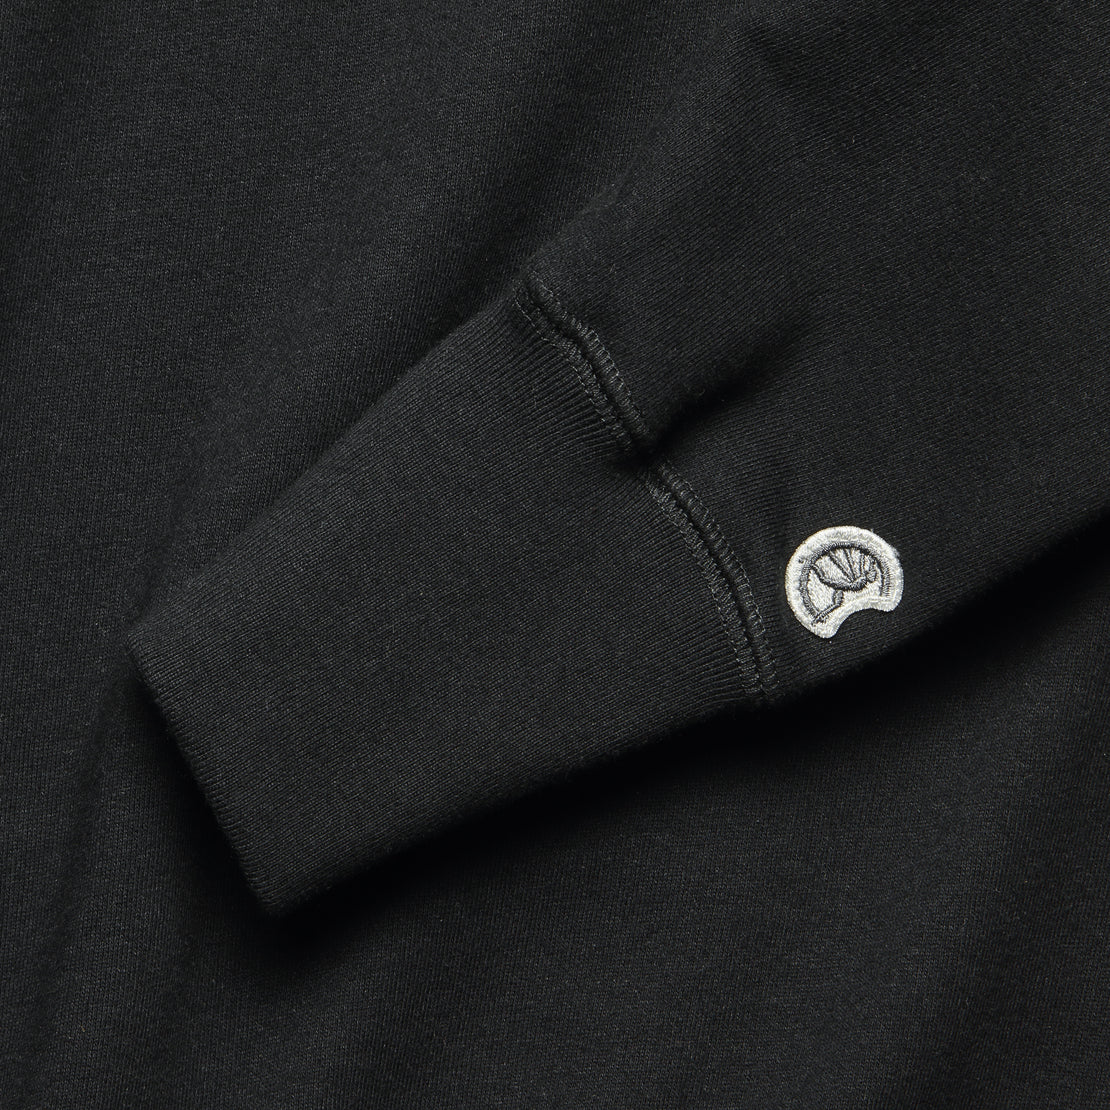 Pocket Sweatshirt - Black - Todd Snyder - STAG Provisions - Tops - Fleece / Sweatshirt